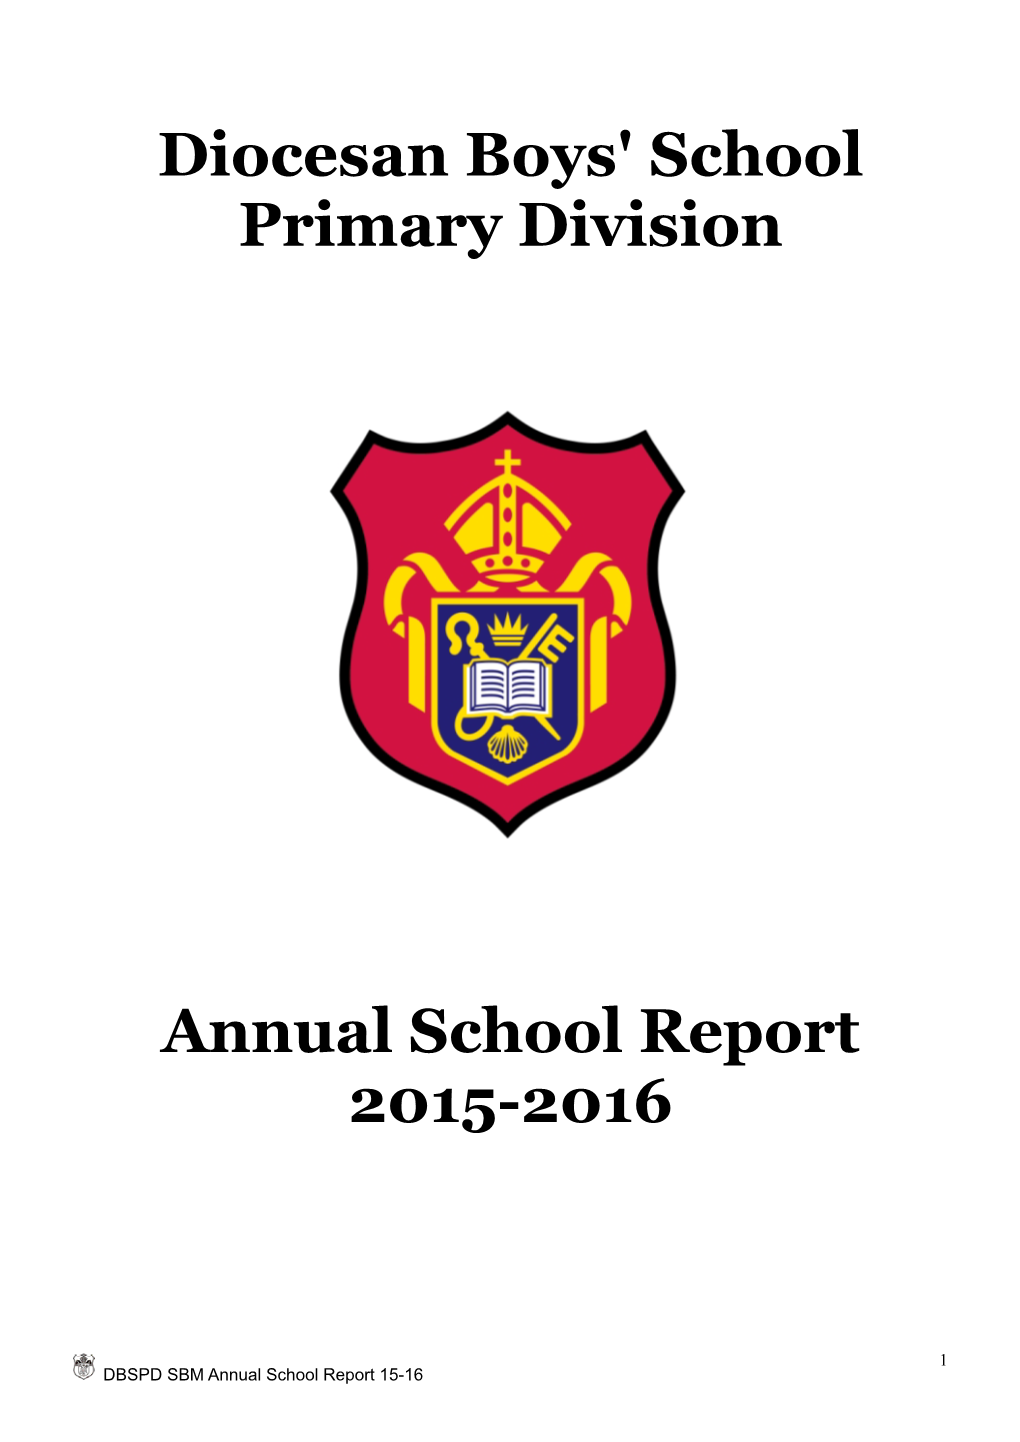 Diocesan Boys' School Primary Division Annual School Report